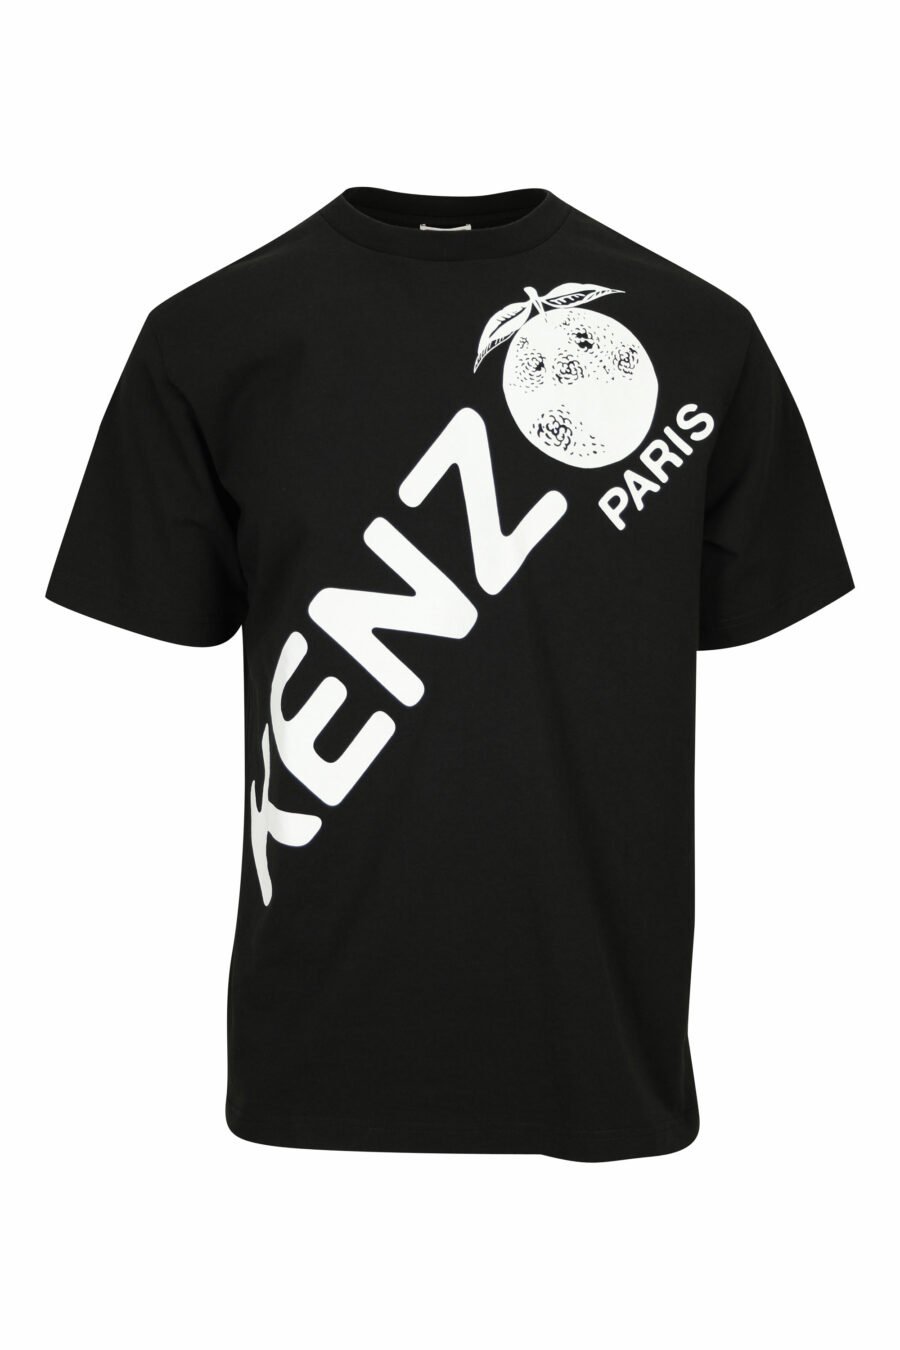 T-shirt noir avec maxilogo diagonal "kenzo orange" - 3612230626997